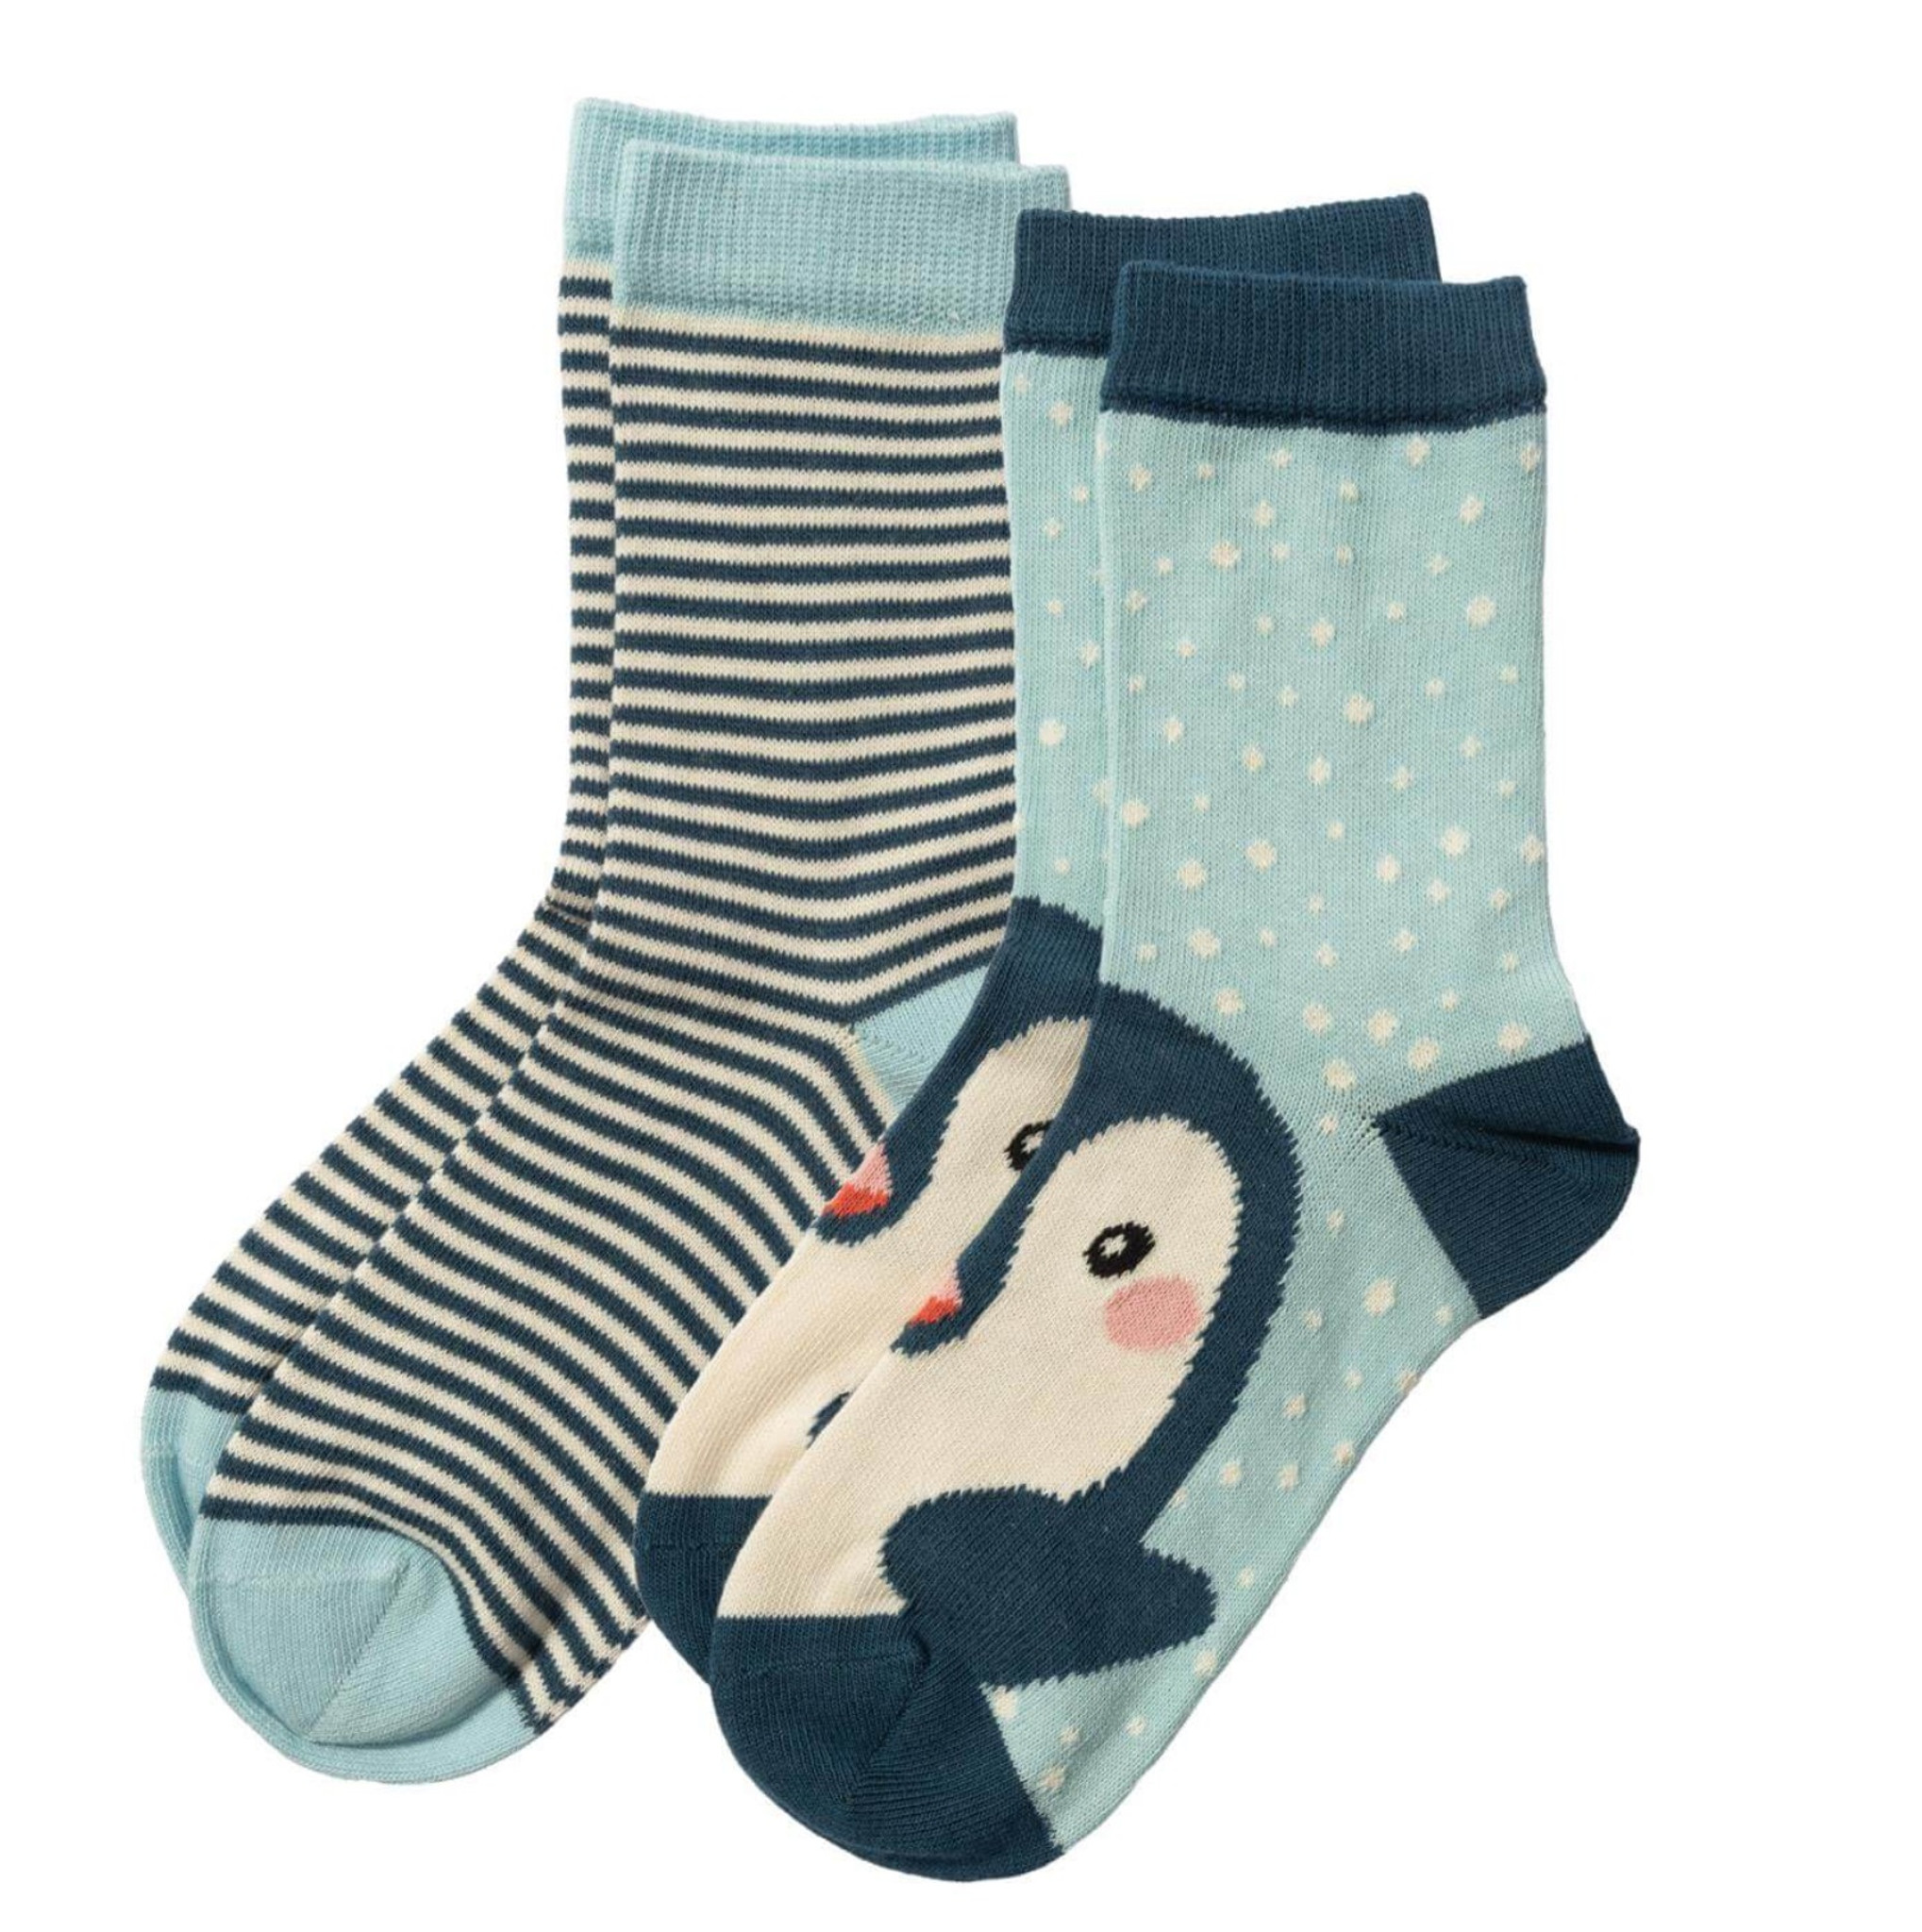 Kids Organic Cotton Socks, Pack of 2 - 